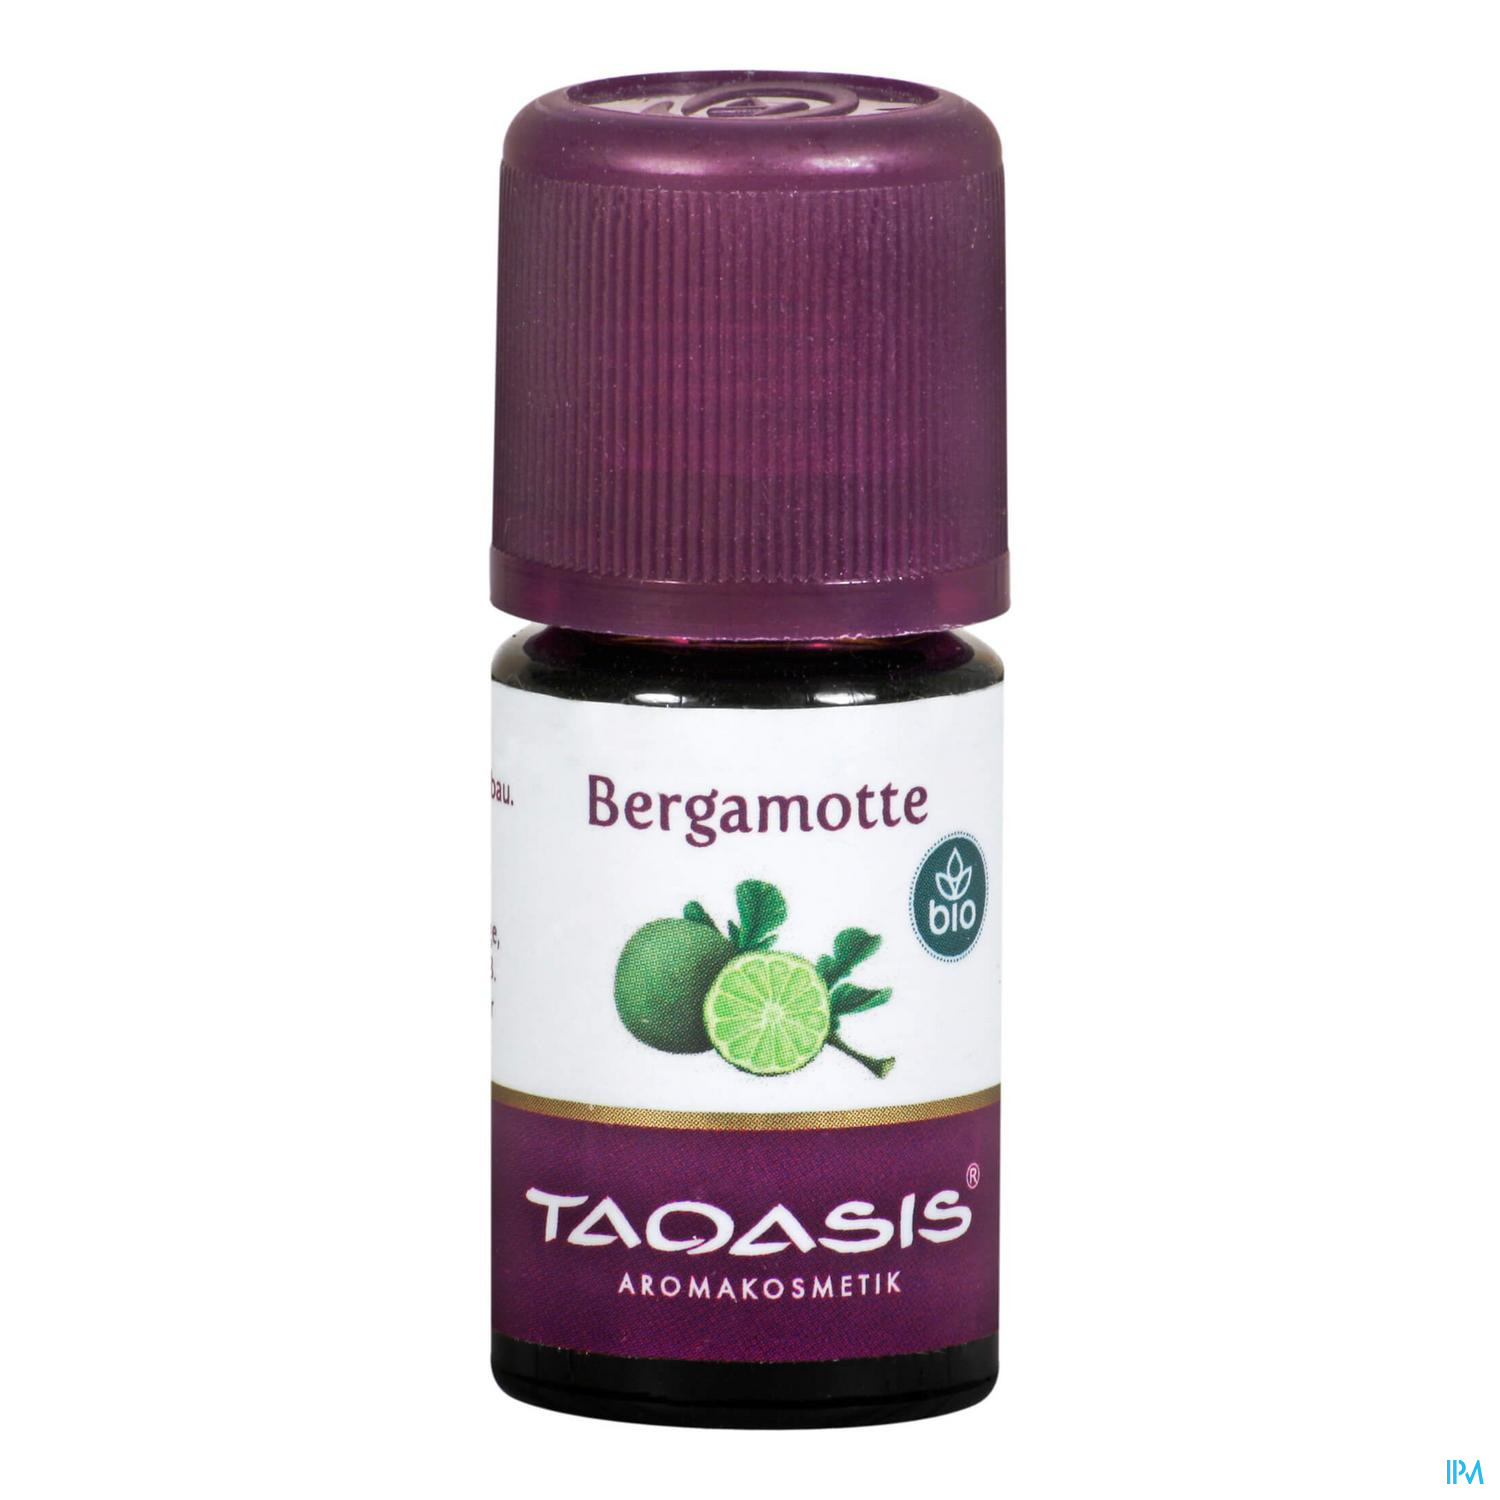 Taoasis Bergamottenöl Bio|demeter 5ml